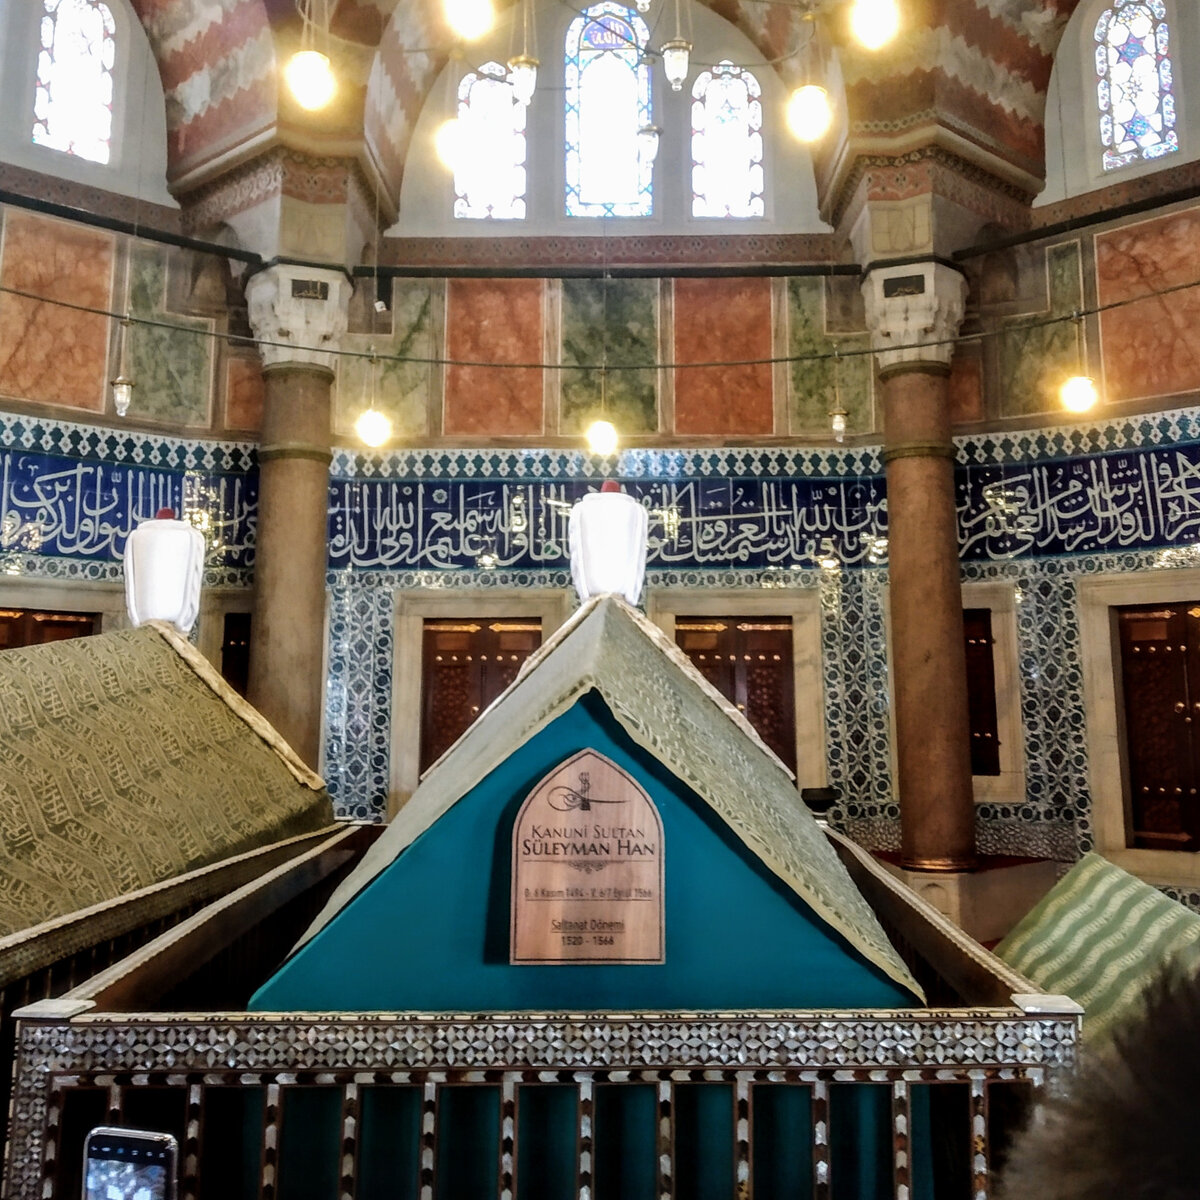 Могила хюррем султан в стамбуле фото